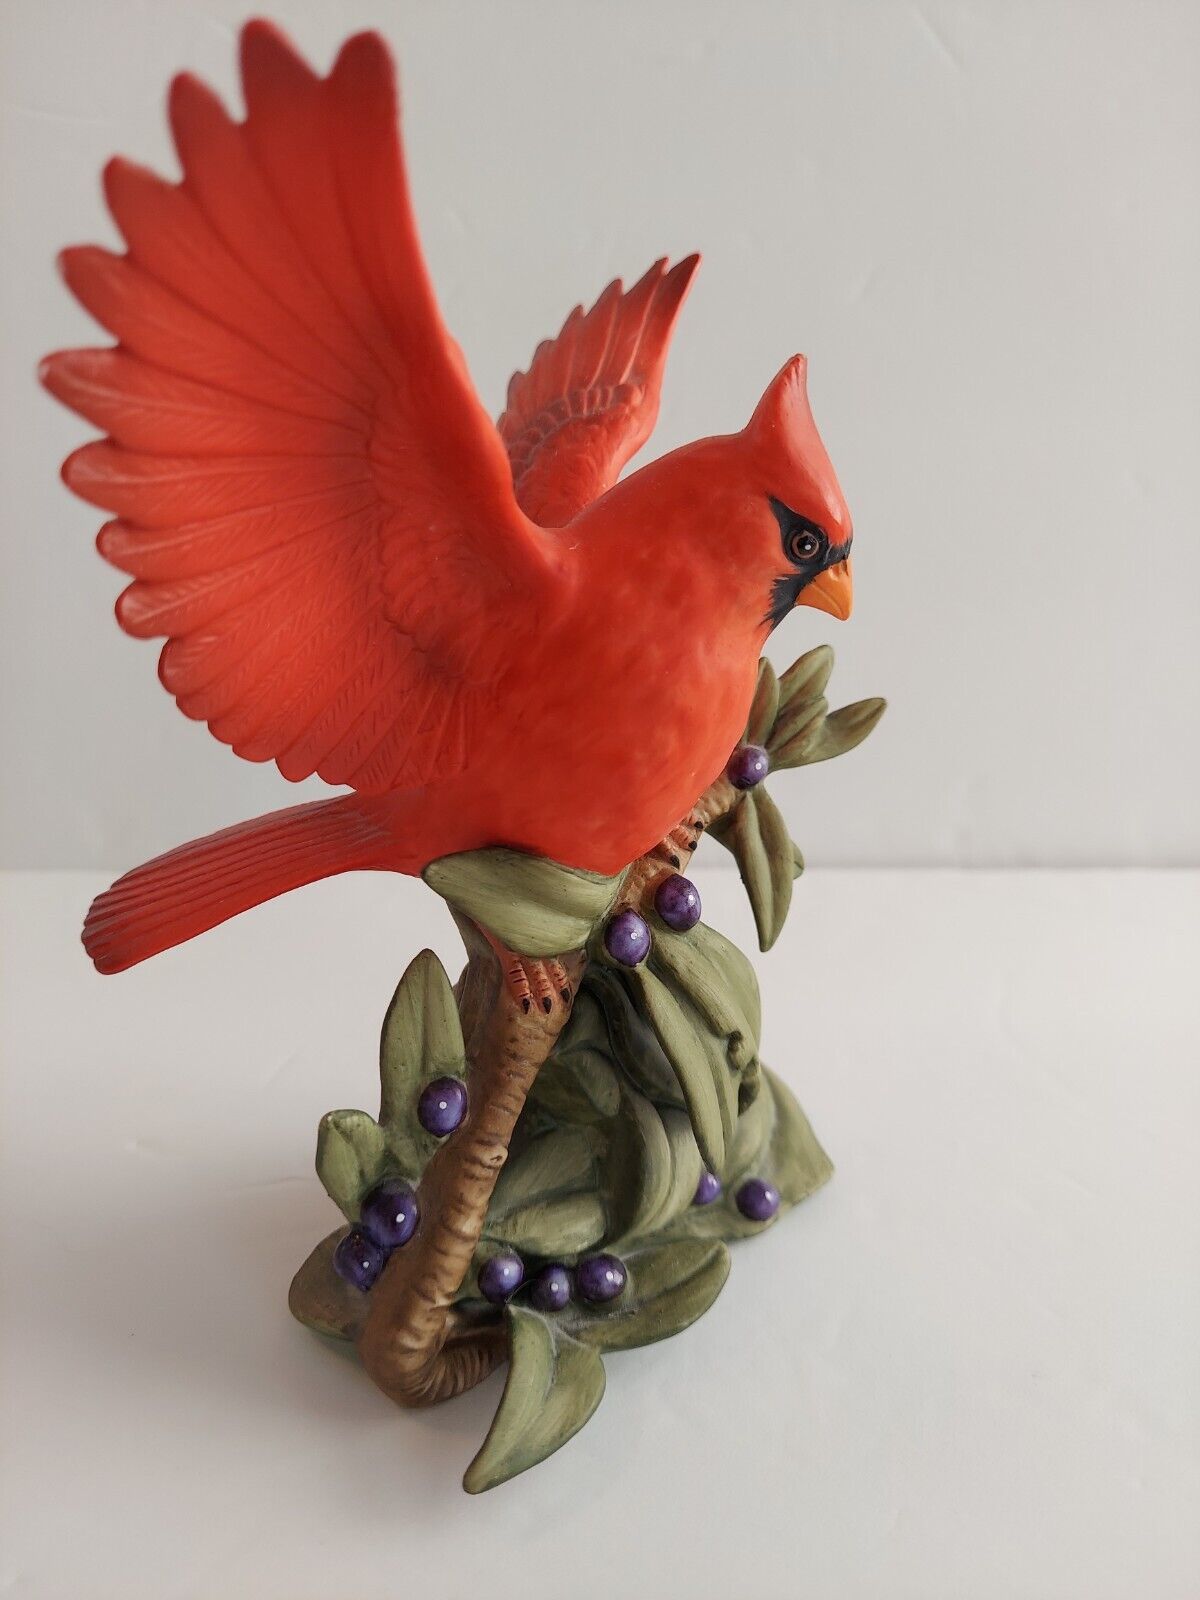 Vintage Enesco Imports Figurine Collection Cardinal Ceramic Handpainted Red Bird